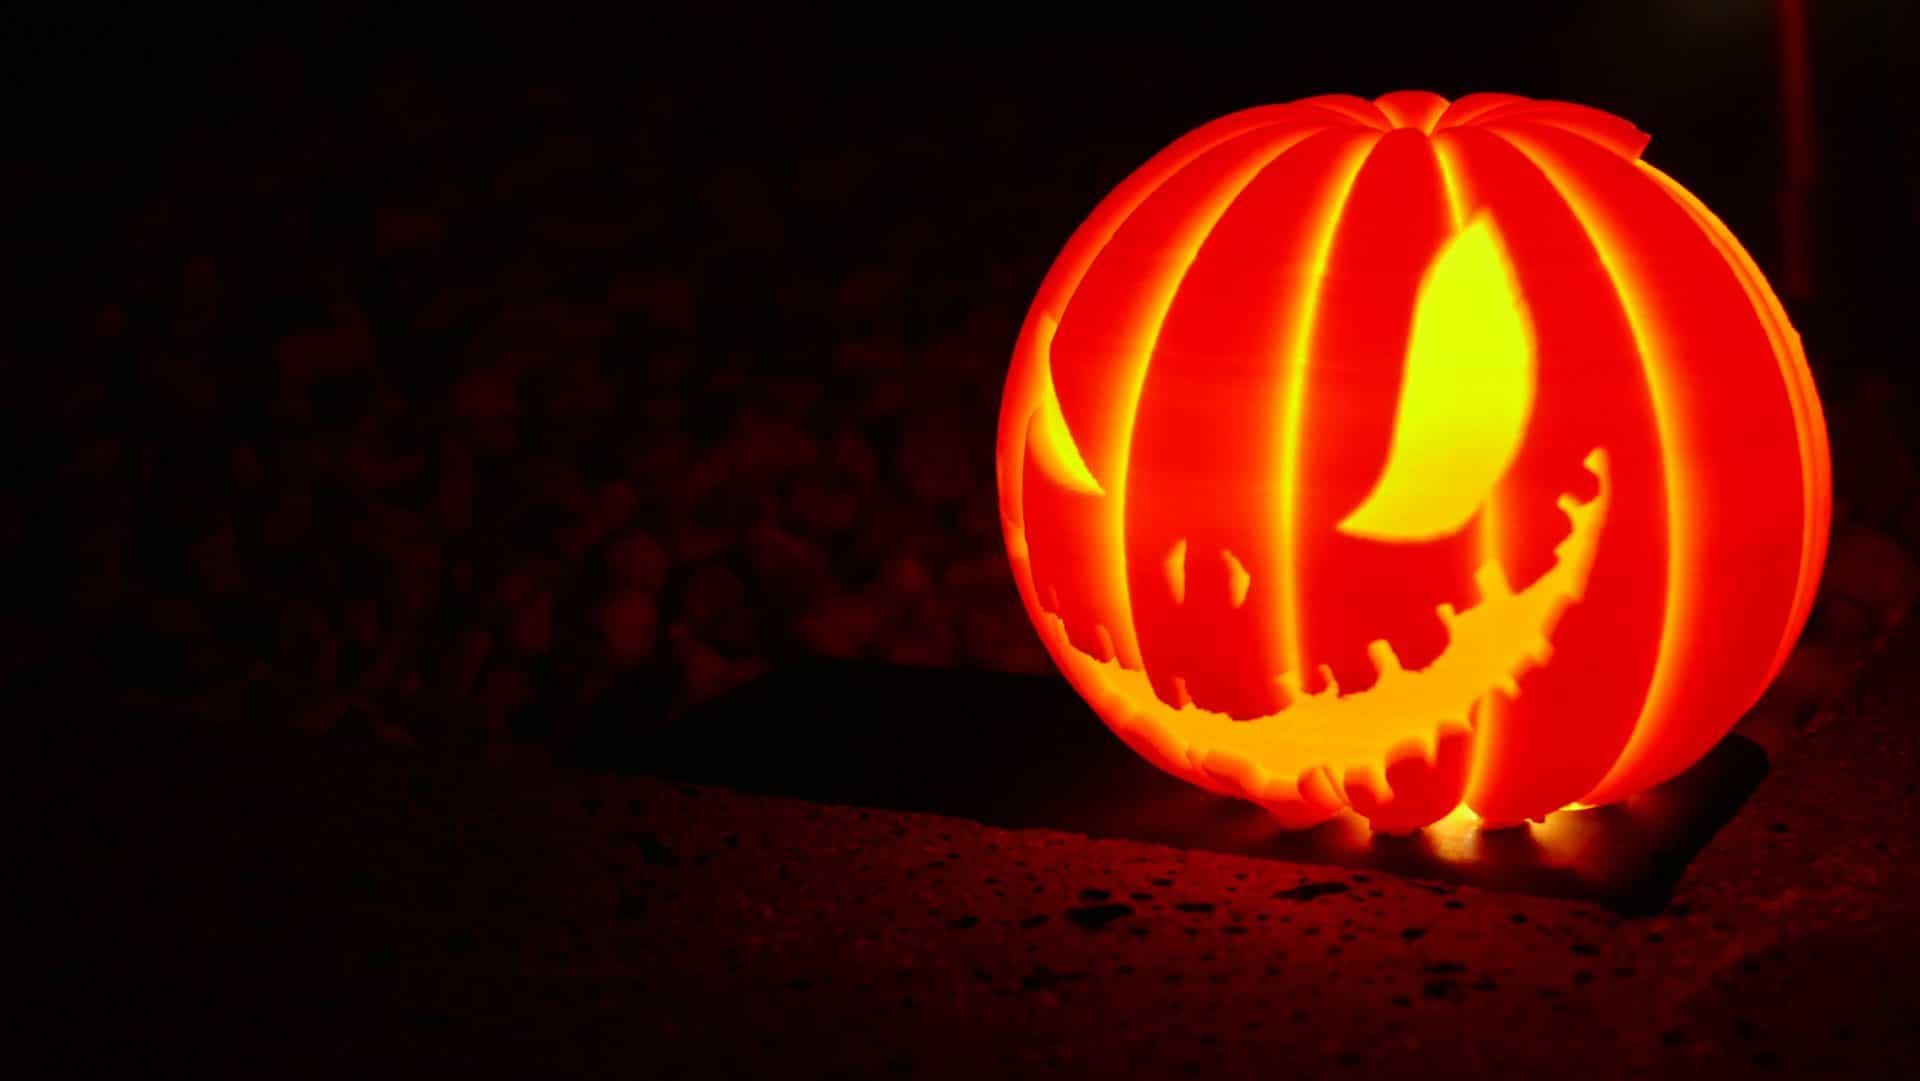 Halloween 3D printed pumpkin lithophane 3D printed with light side